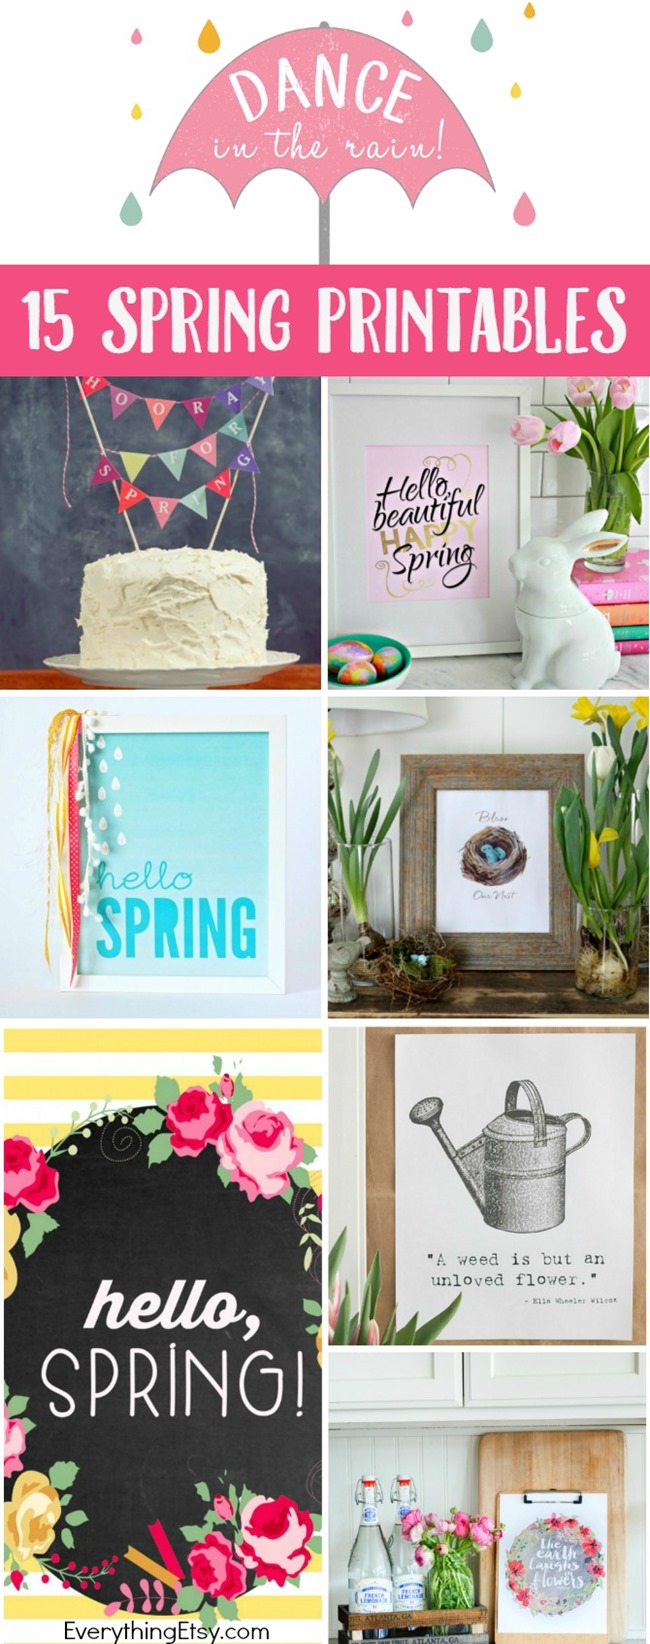 15 Free Spring Printable - DIY home awesomeness! - EverythingEtsy.com 